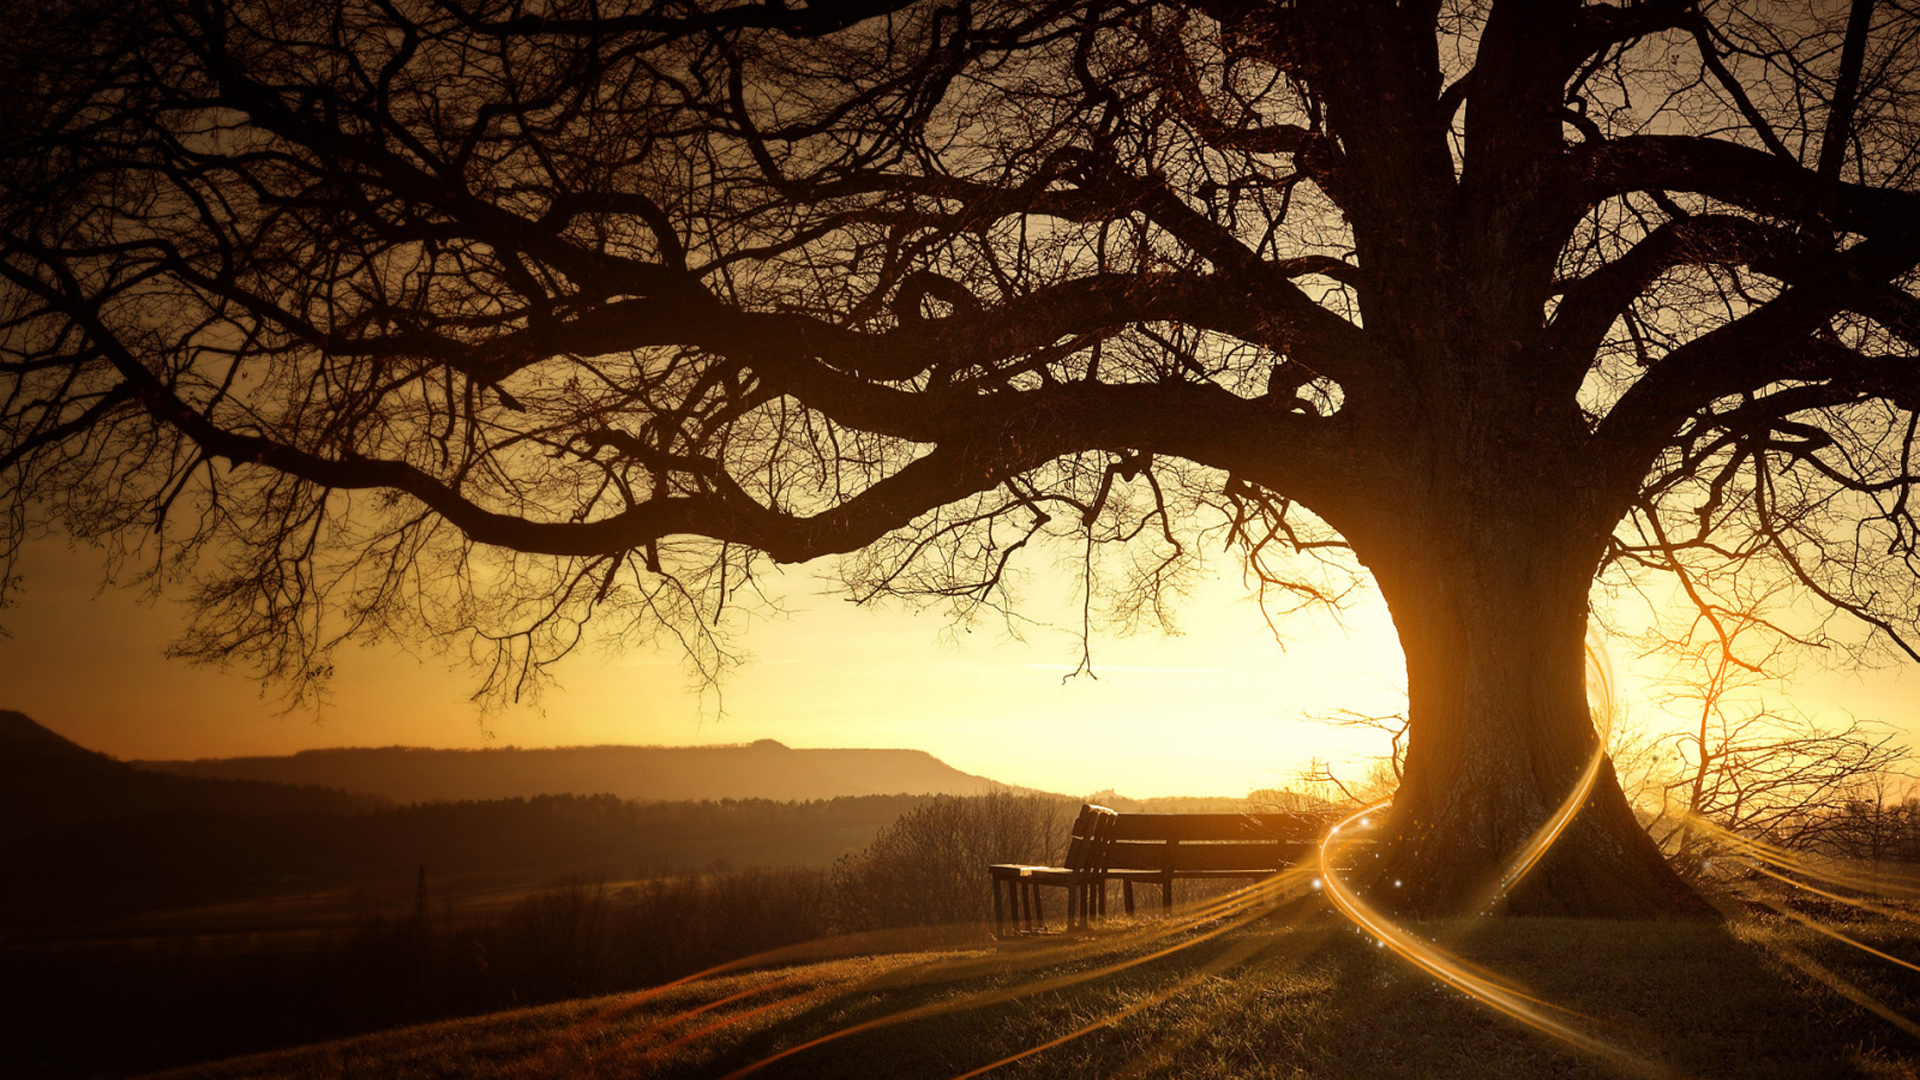 sunset, landscapes, nature, trees, silhouettes, bench, sunlight, Desktopography - desktop wallpaper